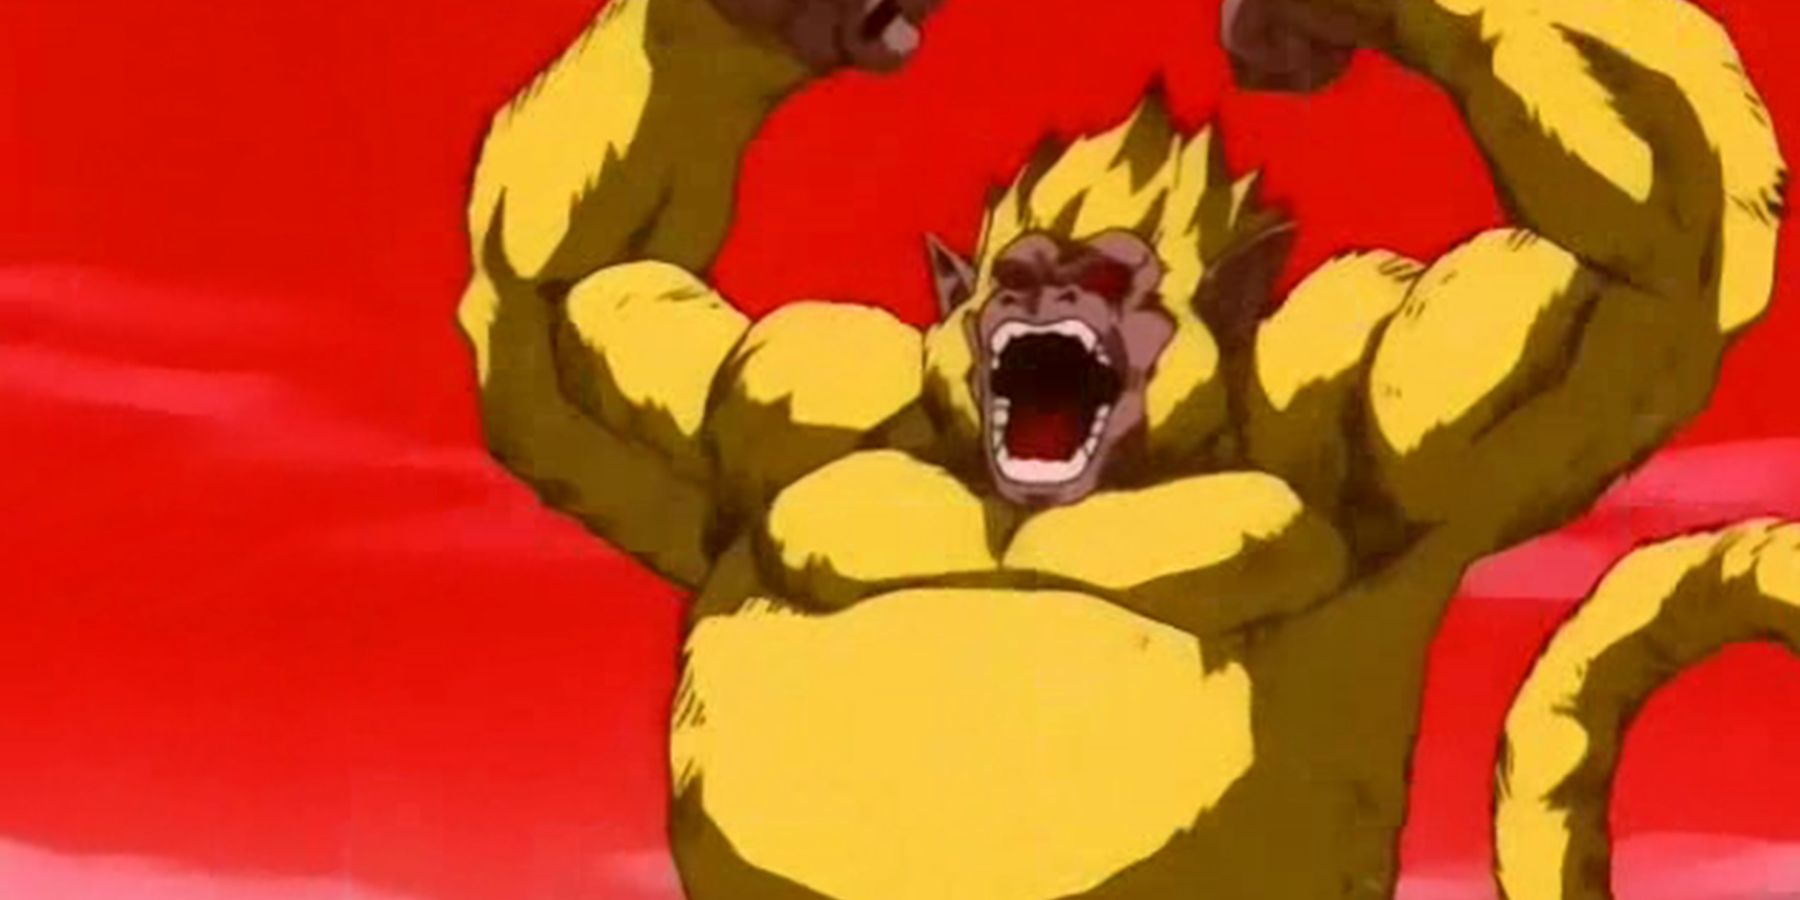 Goku rebels as a Golden Great Ape in Dragon Ball GT